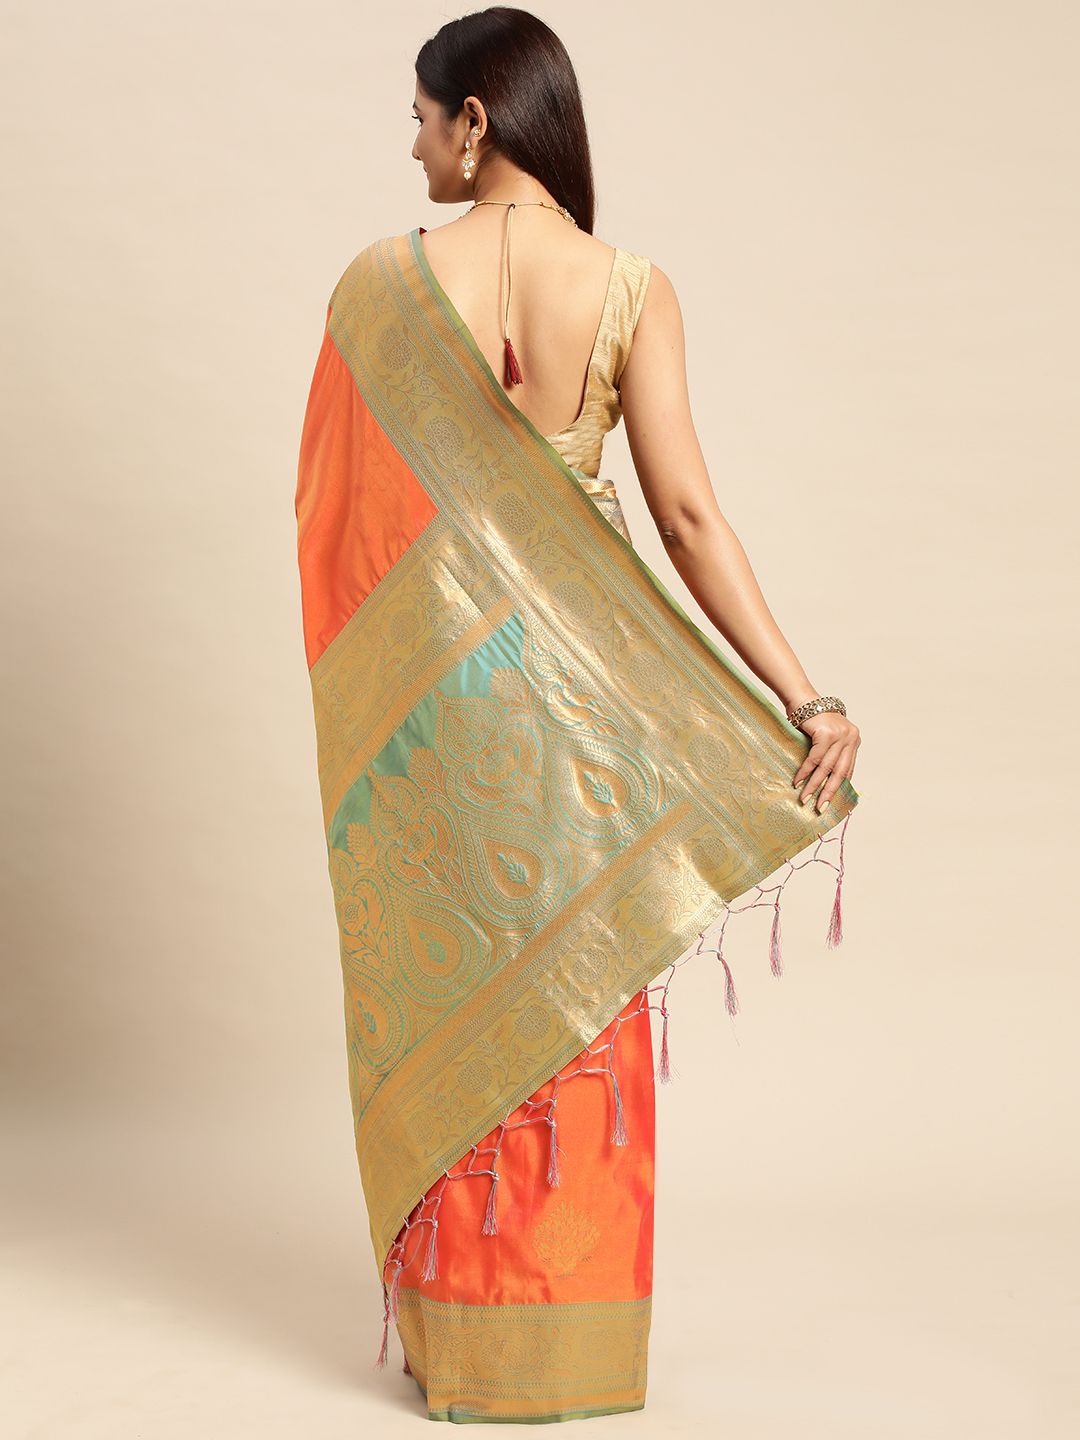 Orenge Color Party wear banarasi silk saree with contrast Border And Pallu.